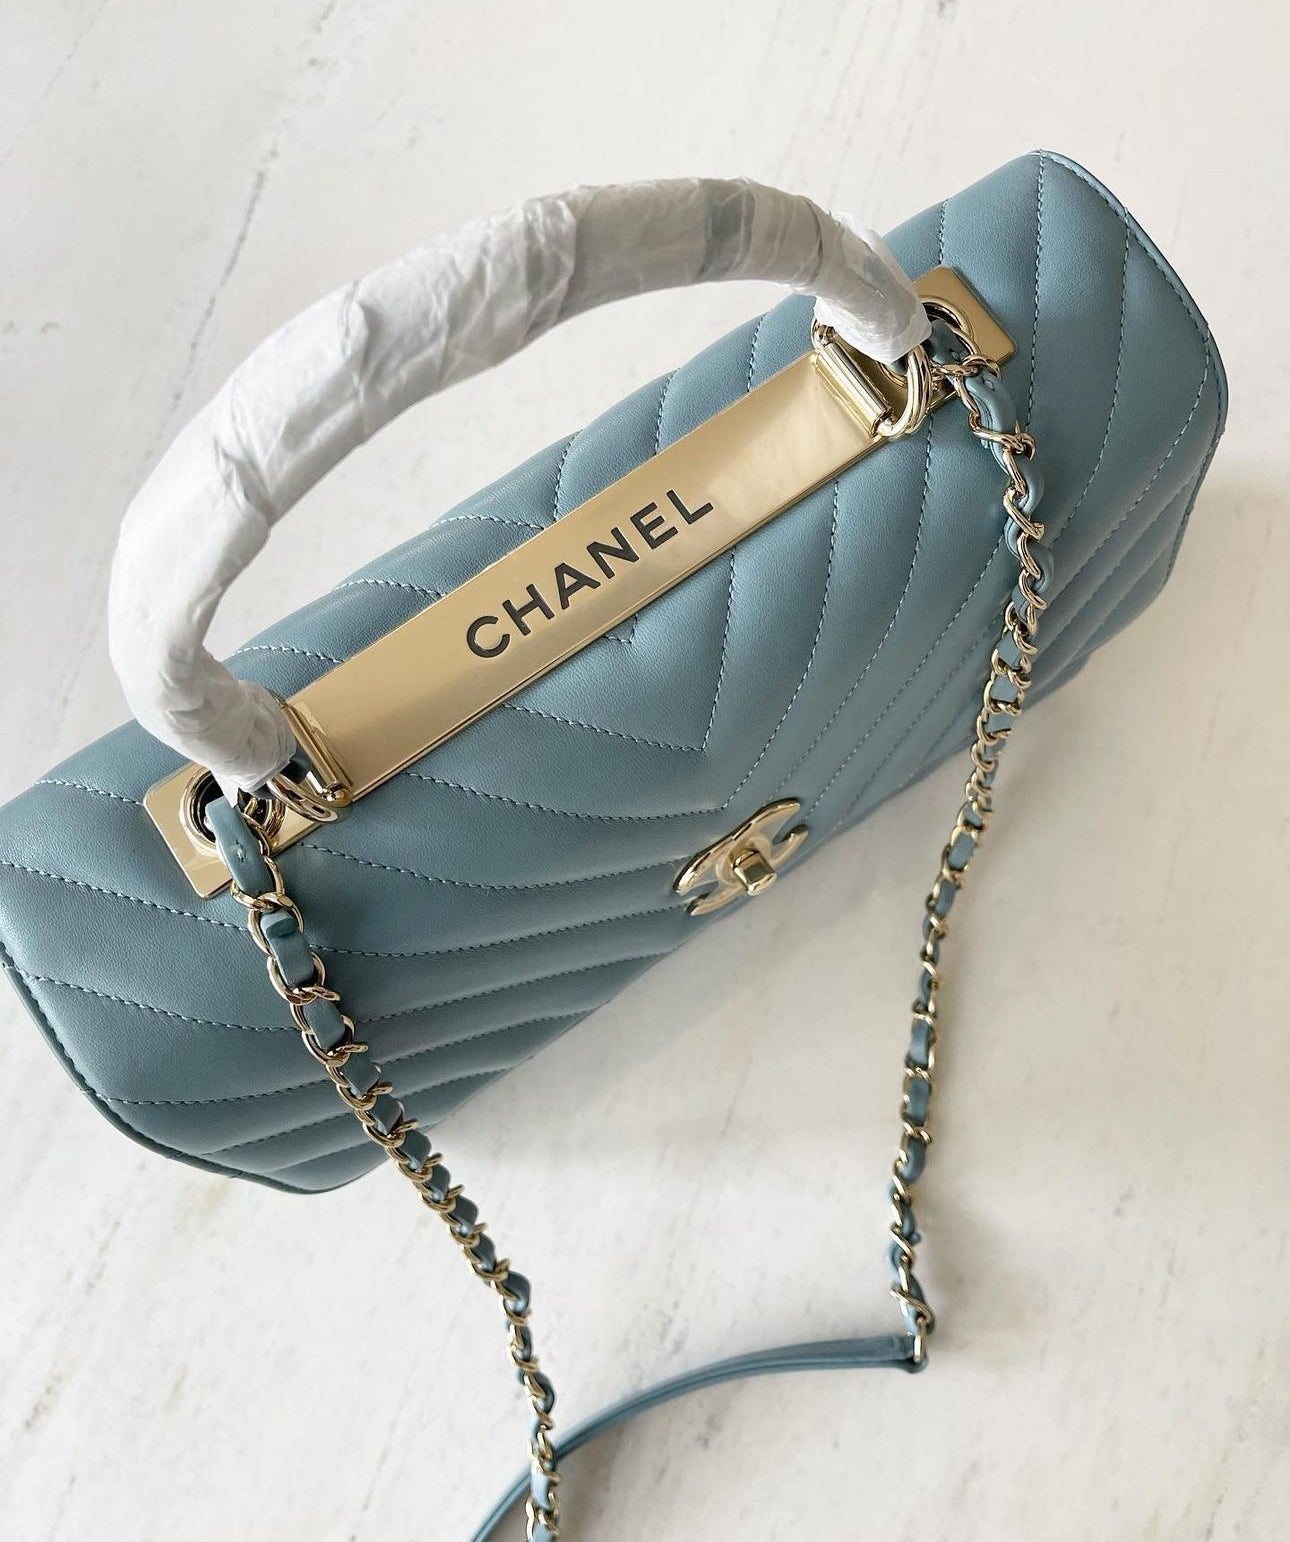 Chanel lambskin medium chevron trendy top handle